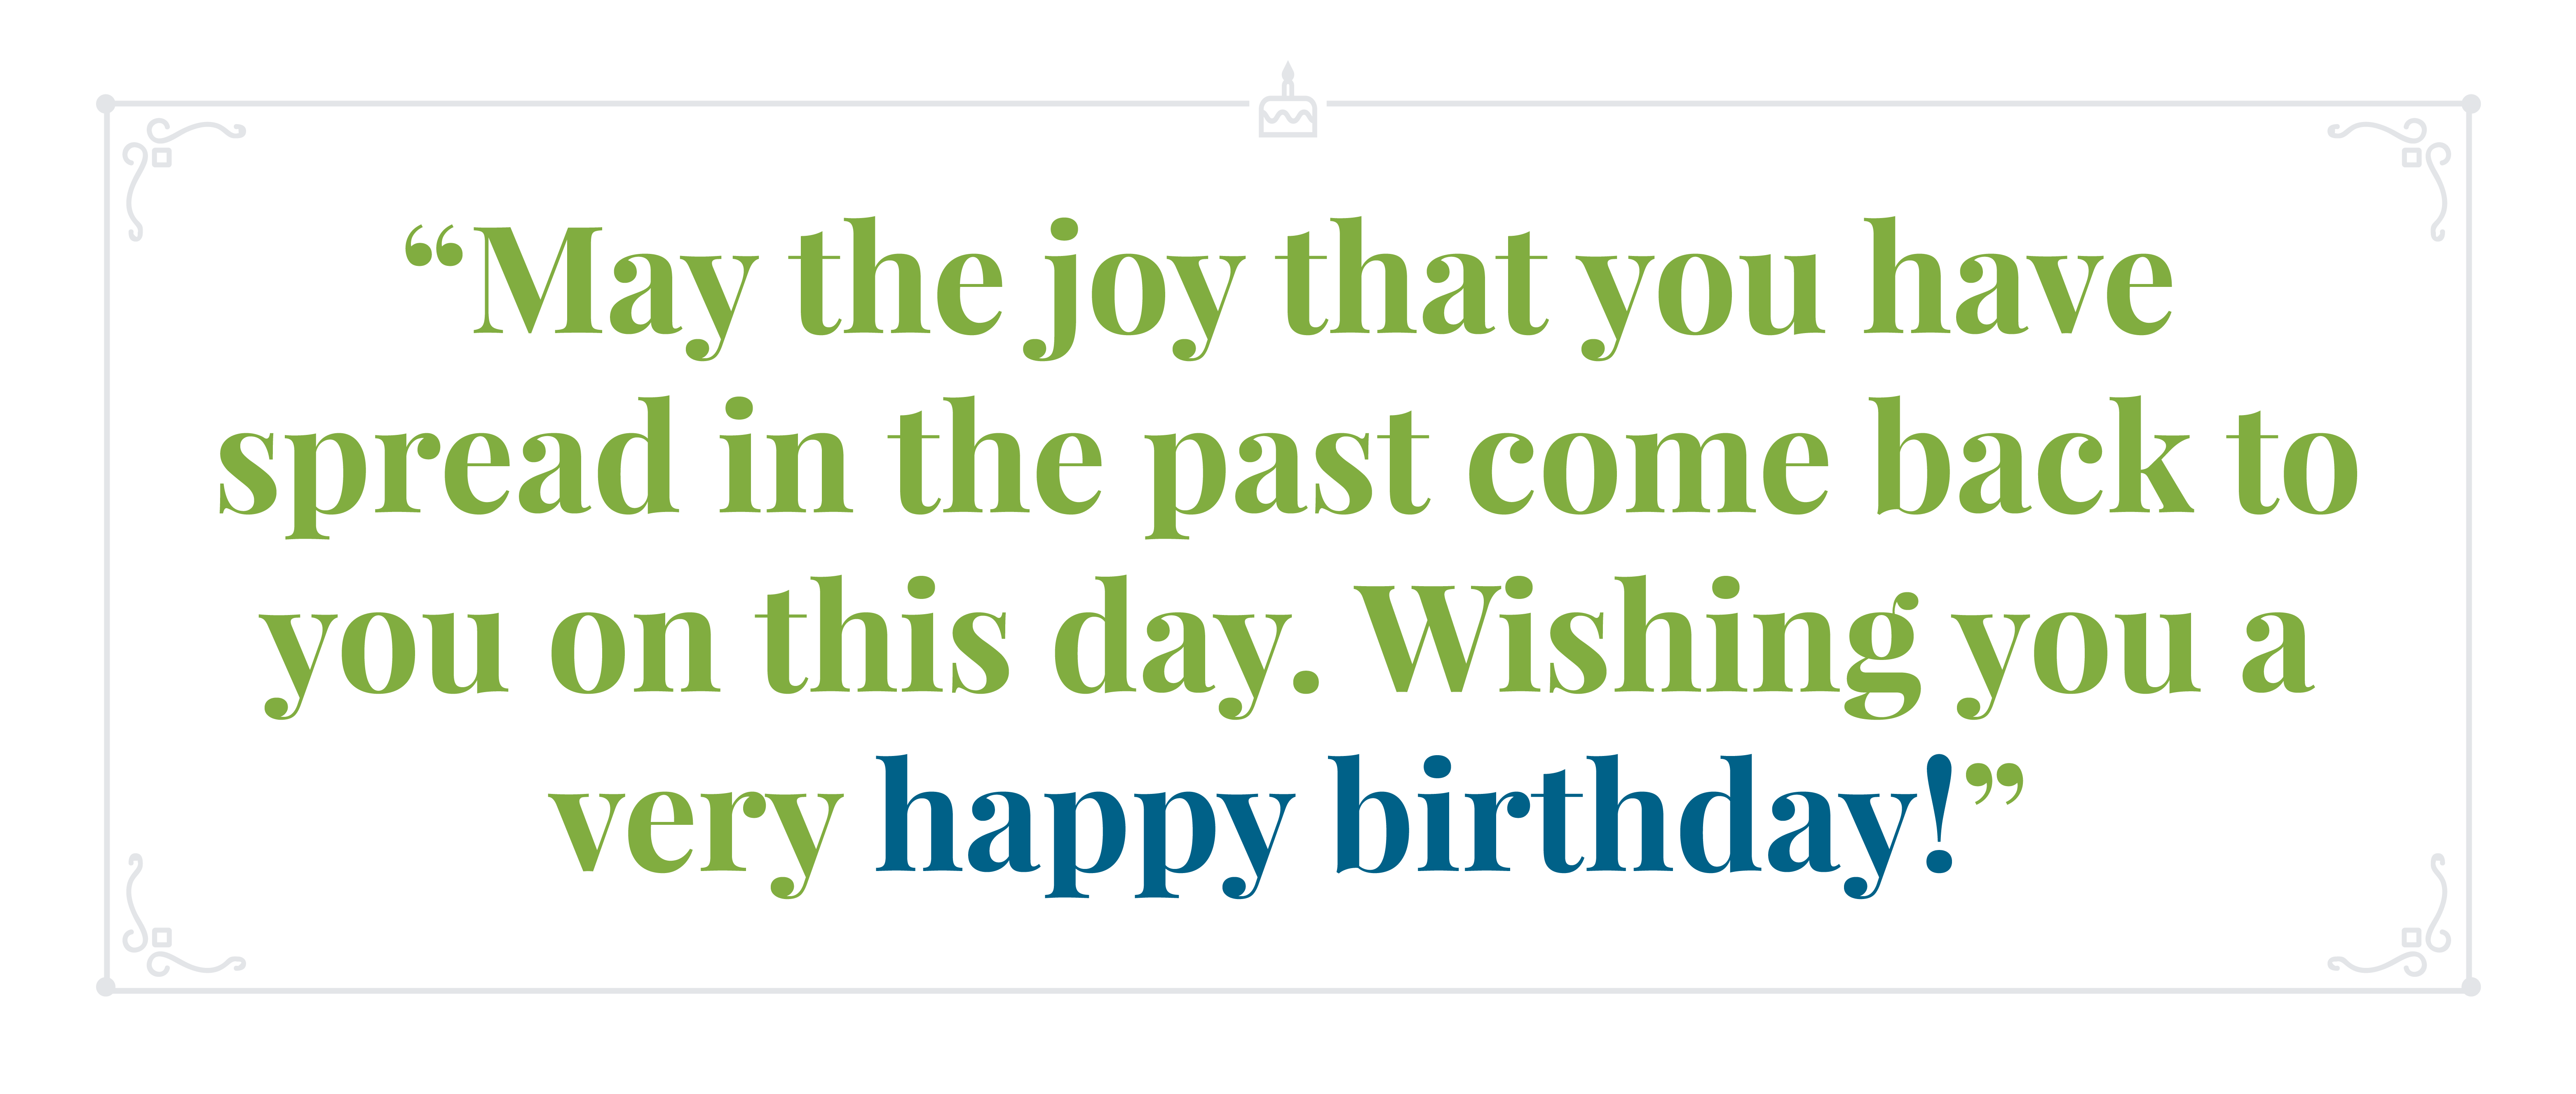 100 Best Happy Birthday Wishes & Quotes | Proflowers